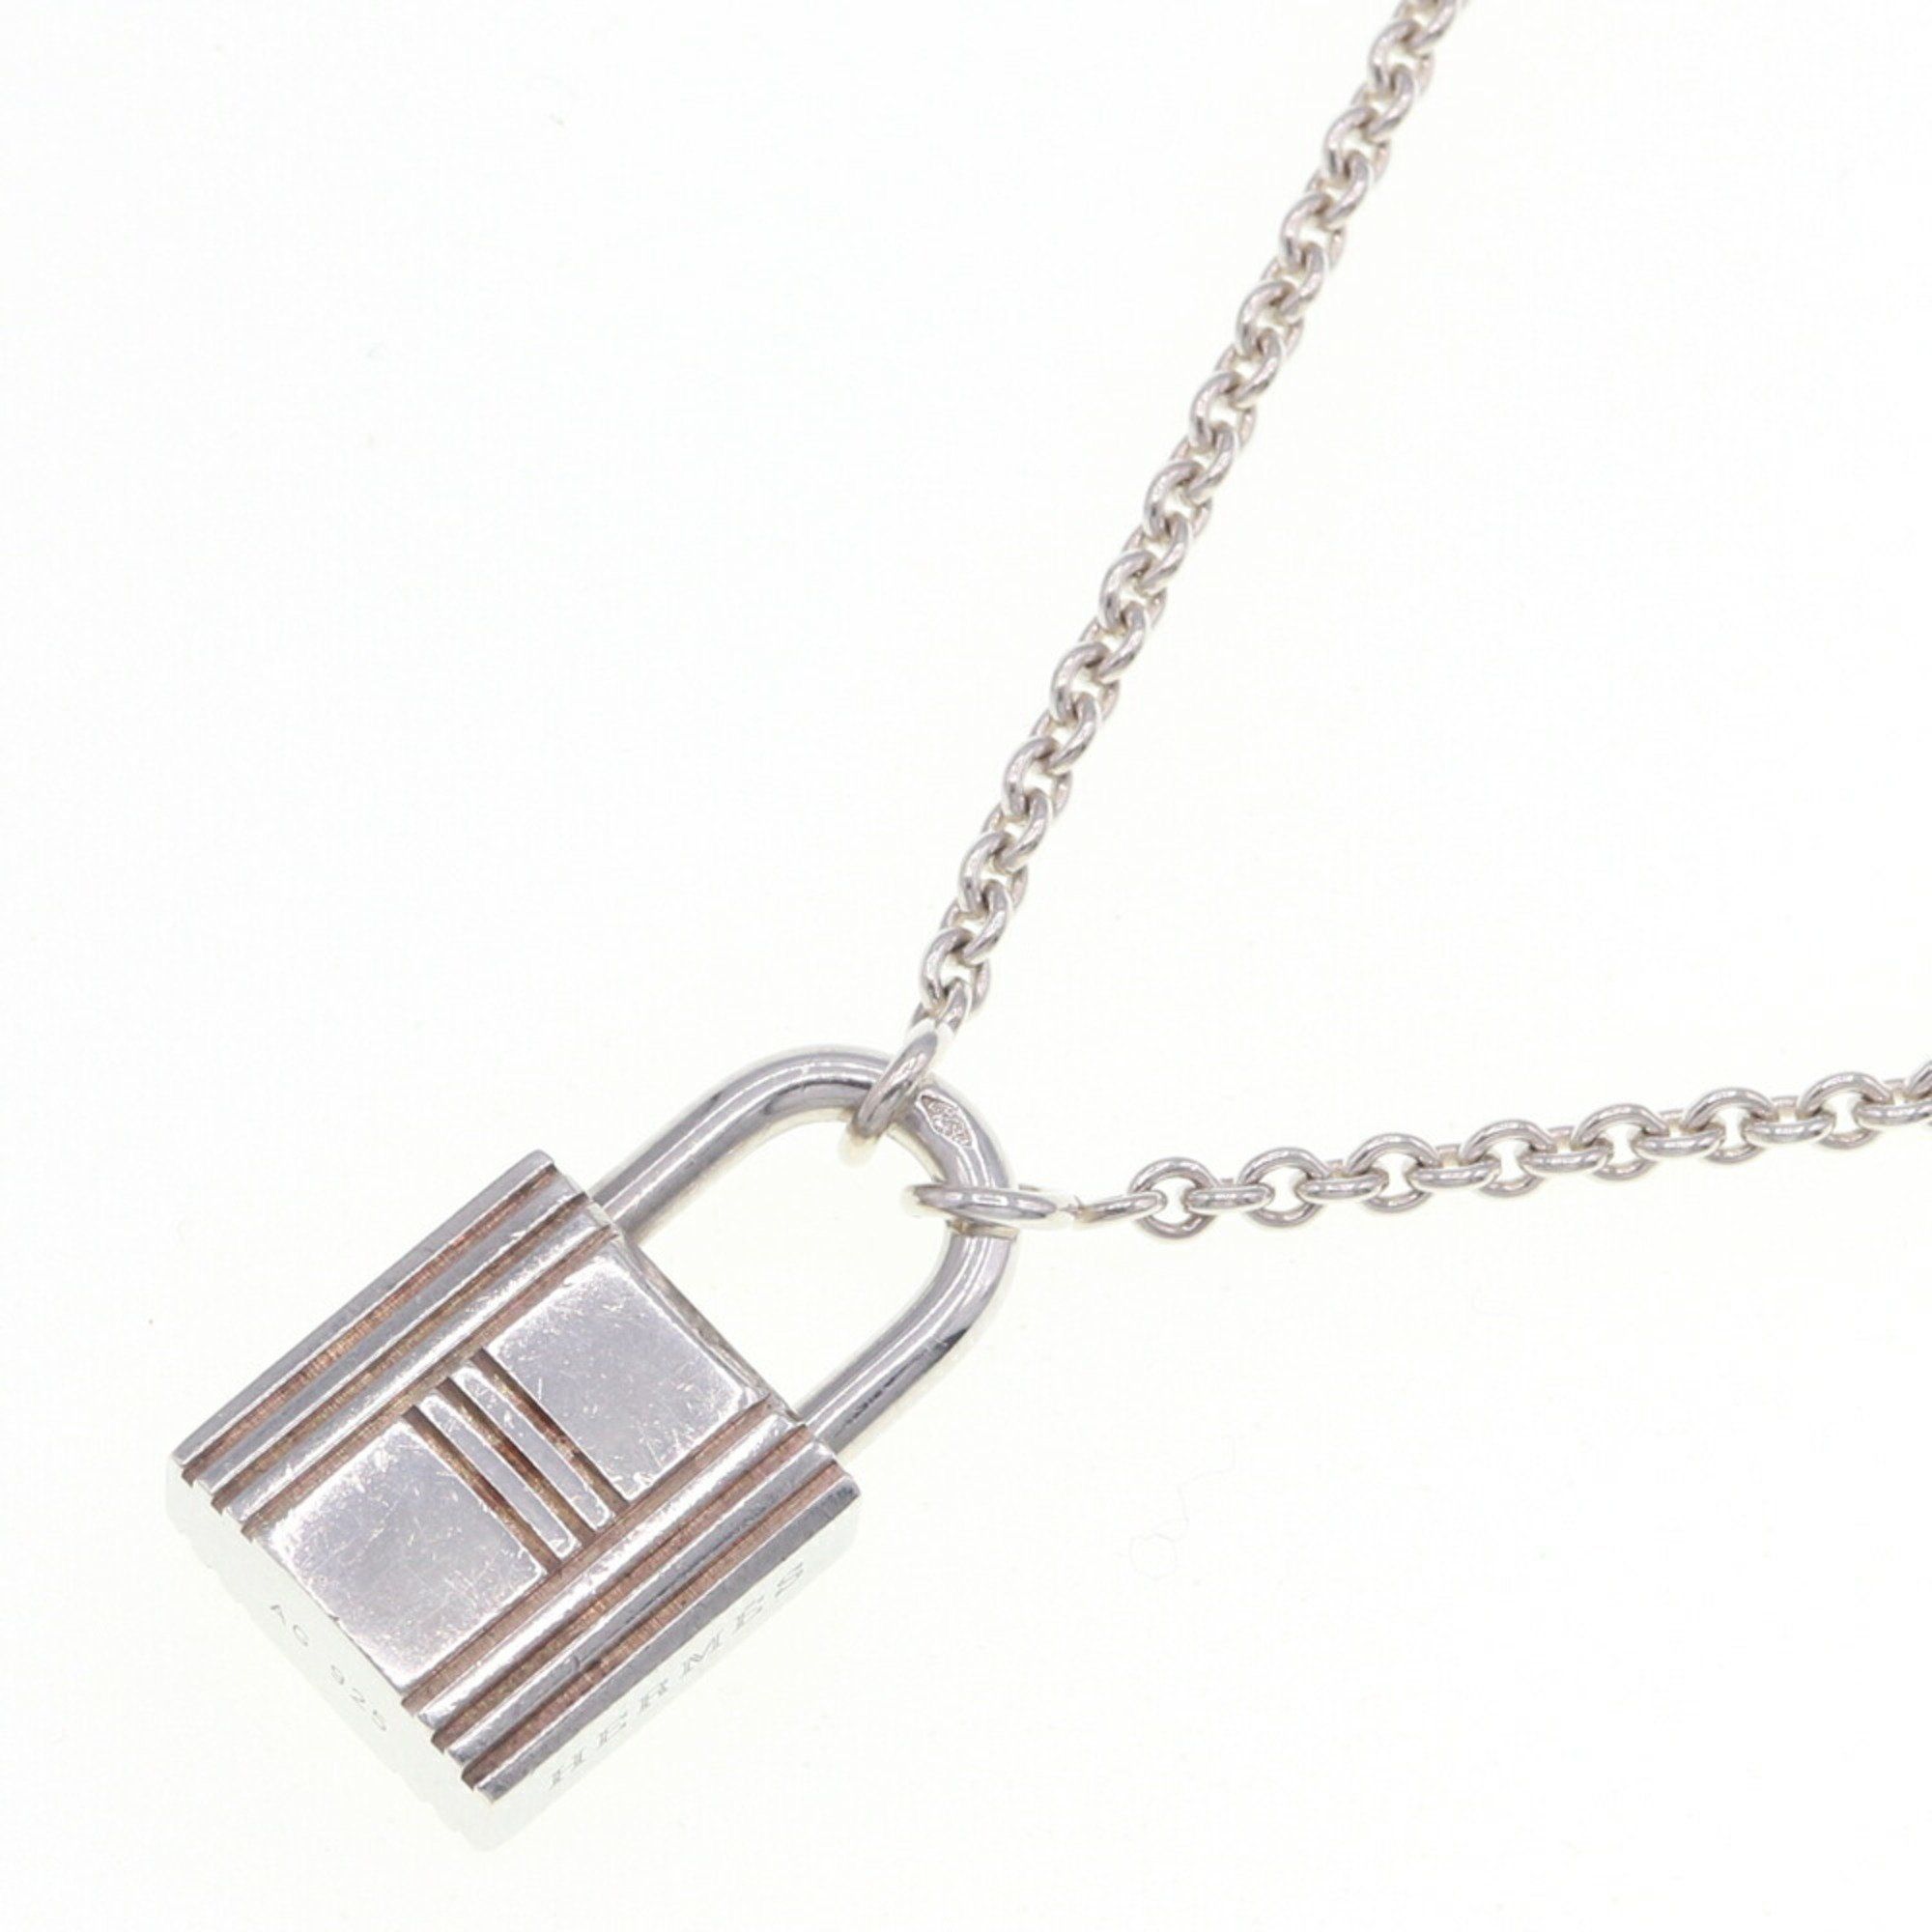 image of Hermes Necklace Cadena Motif Sv Sterling Silver 925 Pendant Choker Kadena Padlock Hermes, Women's